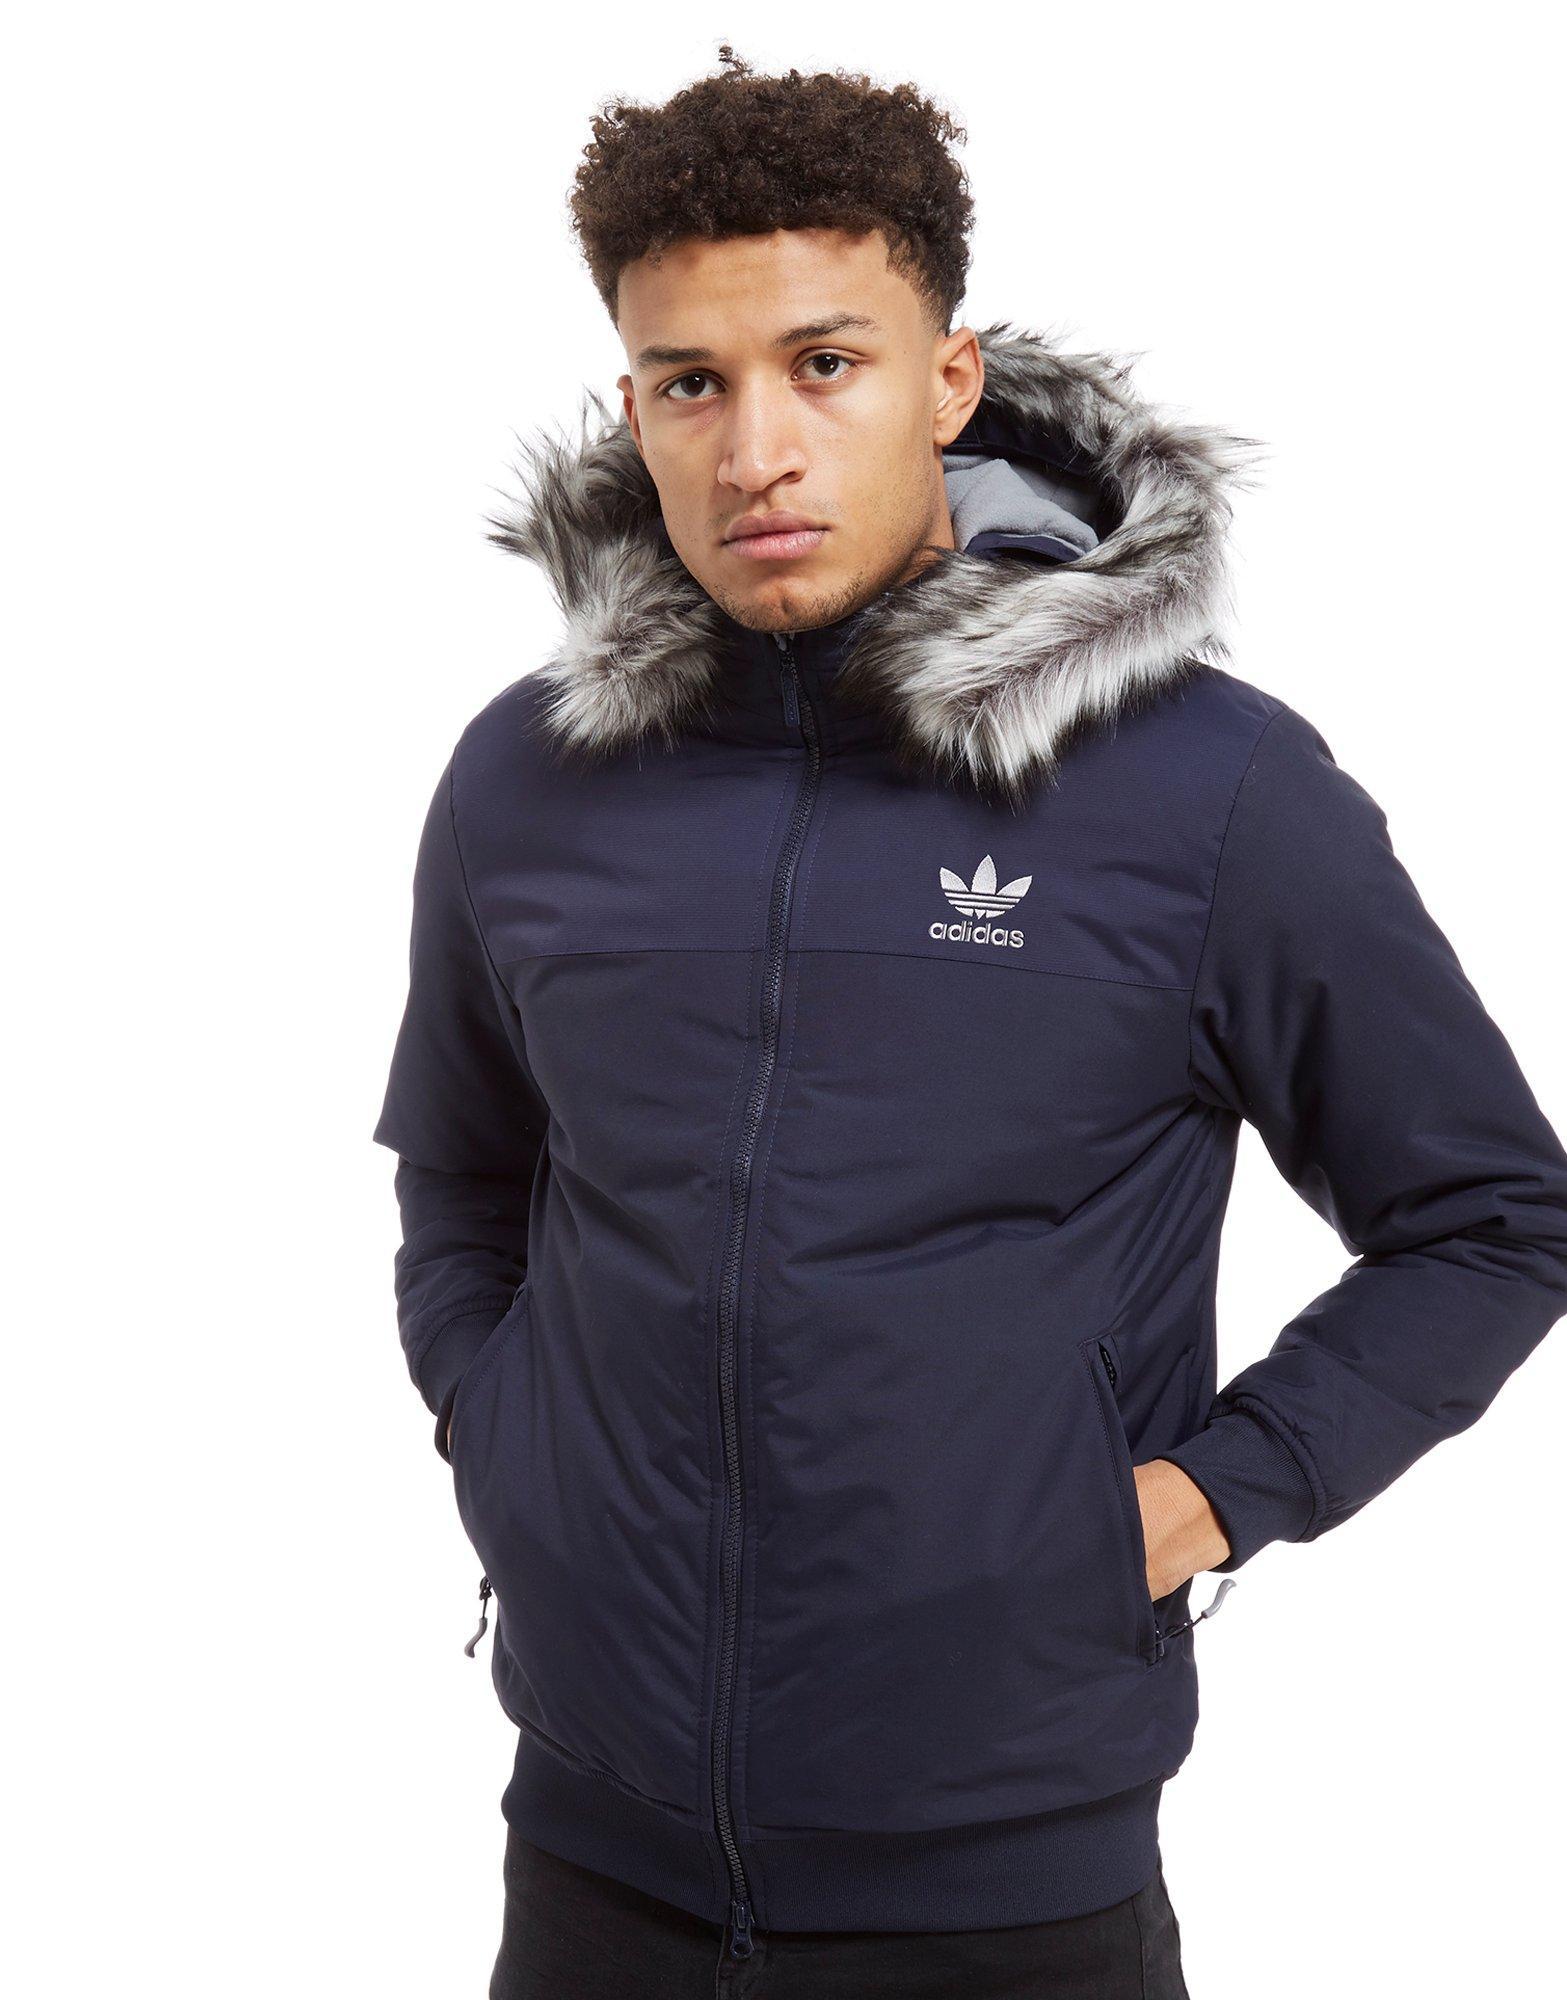 adidas Originals Trefoil Fur Padded Parka Jacket in Blue for Men - Lyst